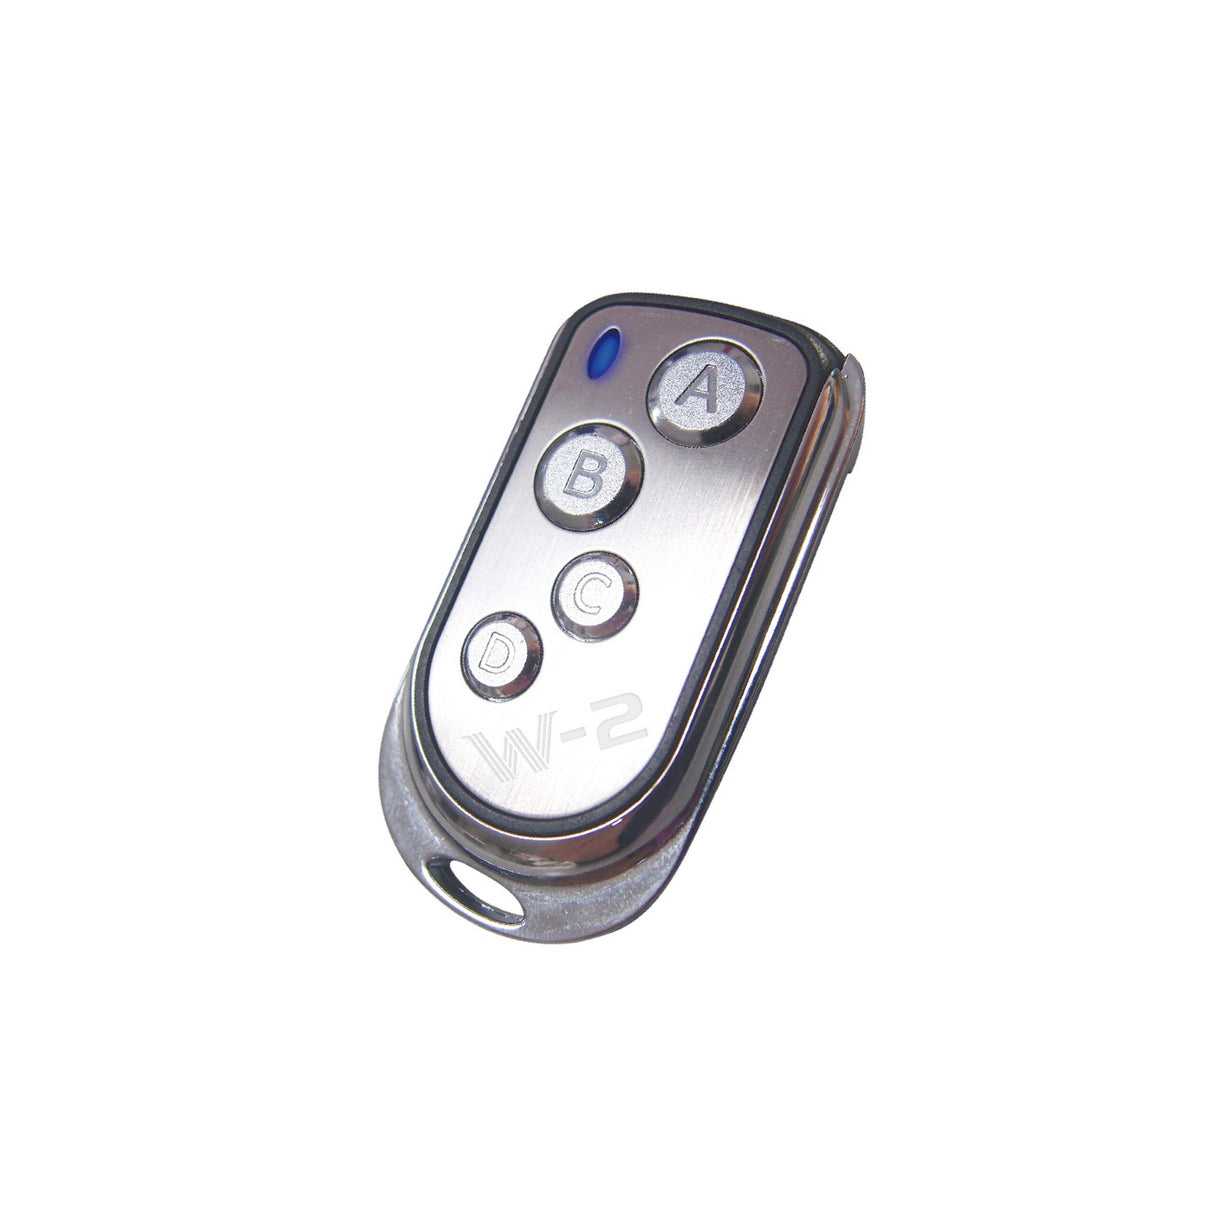 Antari W-2A Replacement 4-Button Remote, 315 MHz